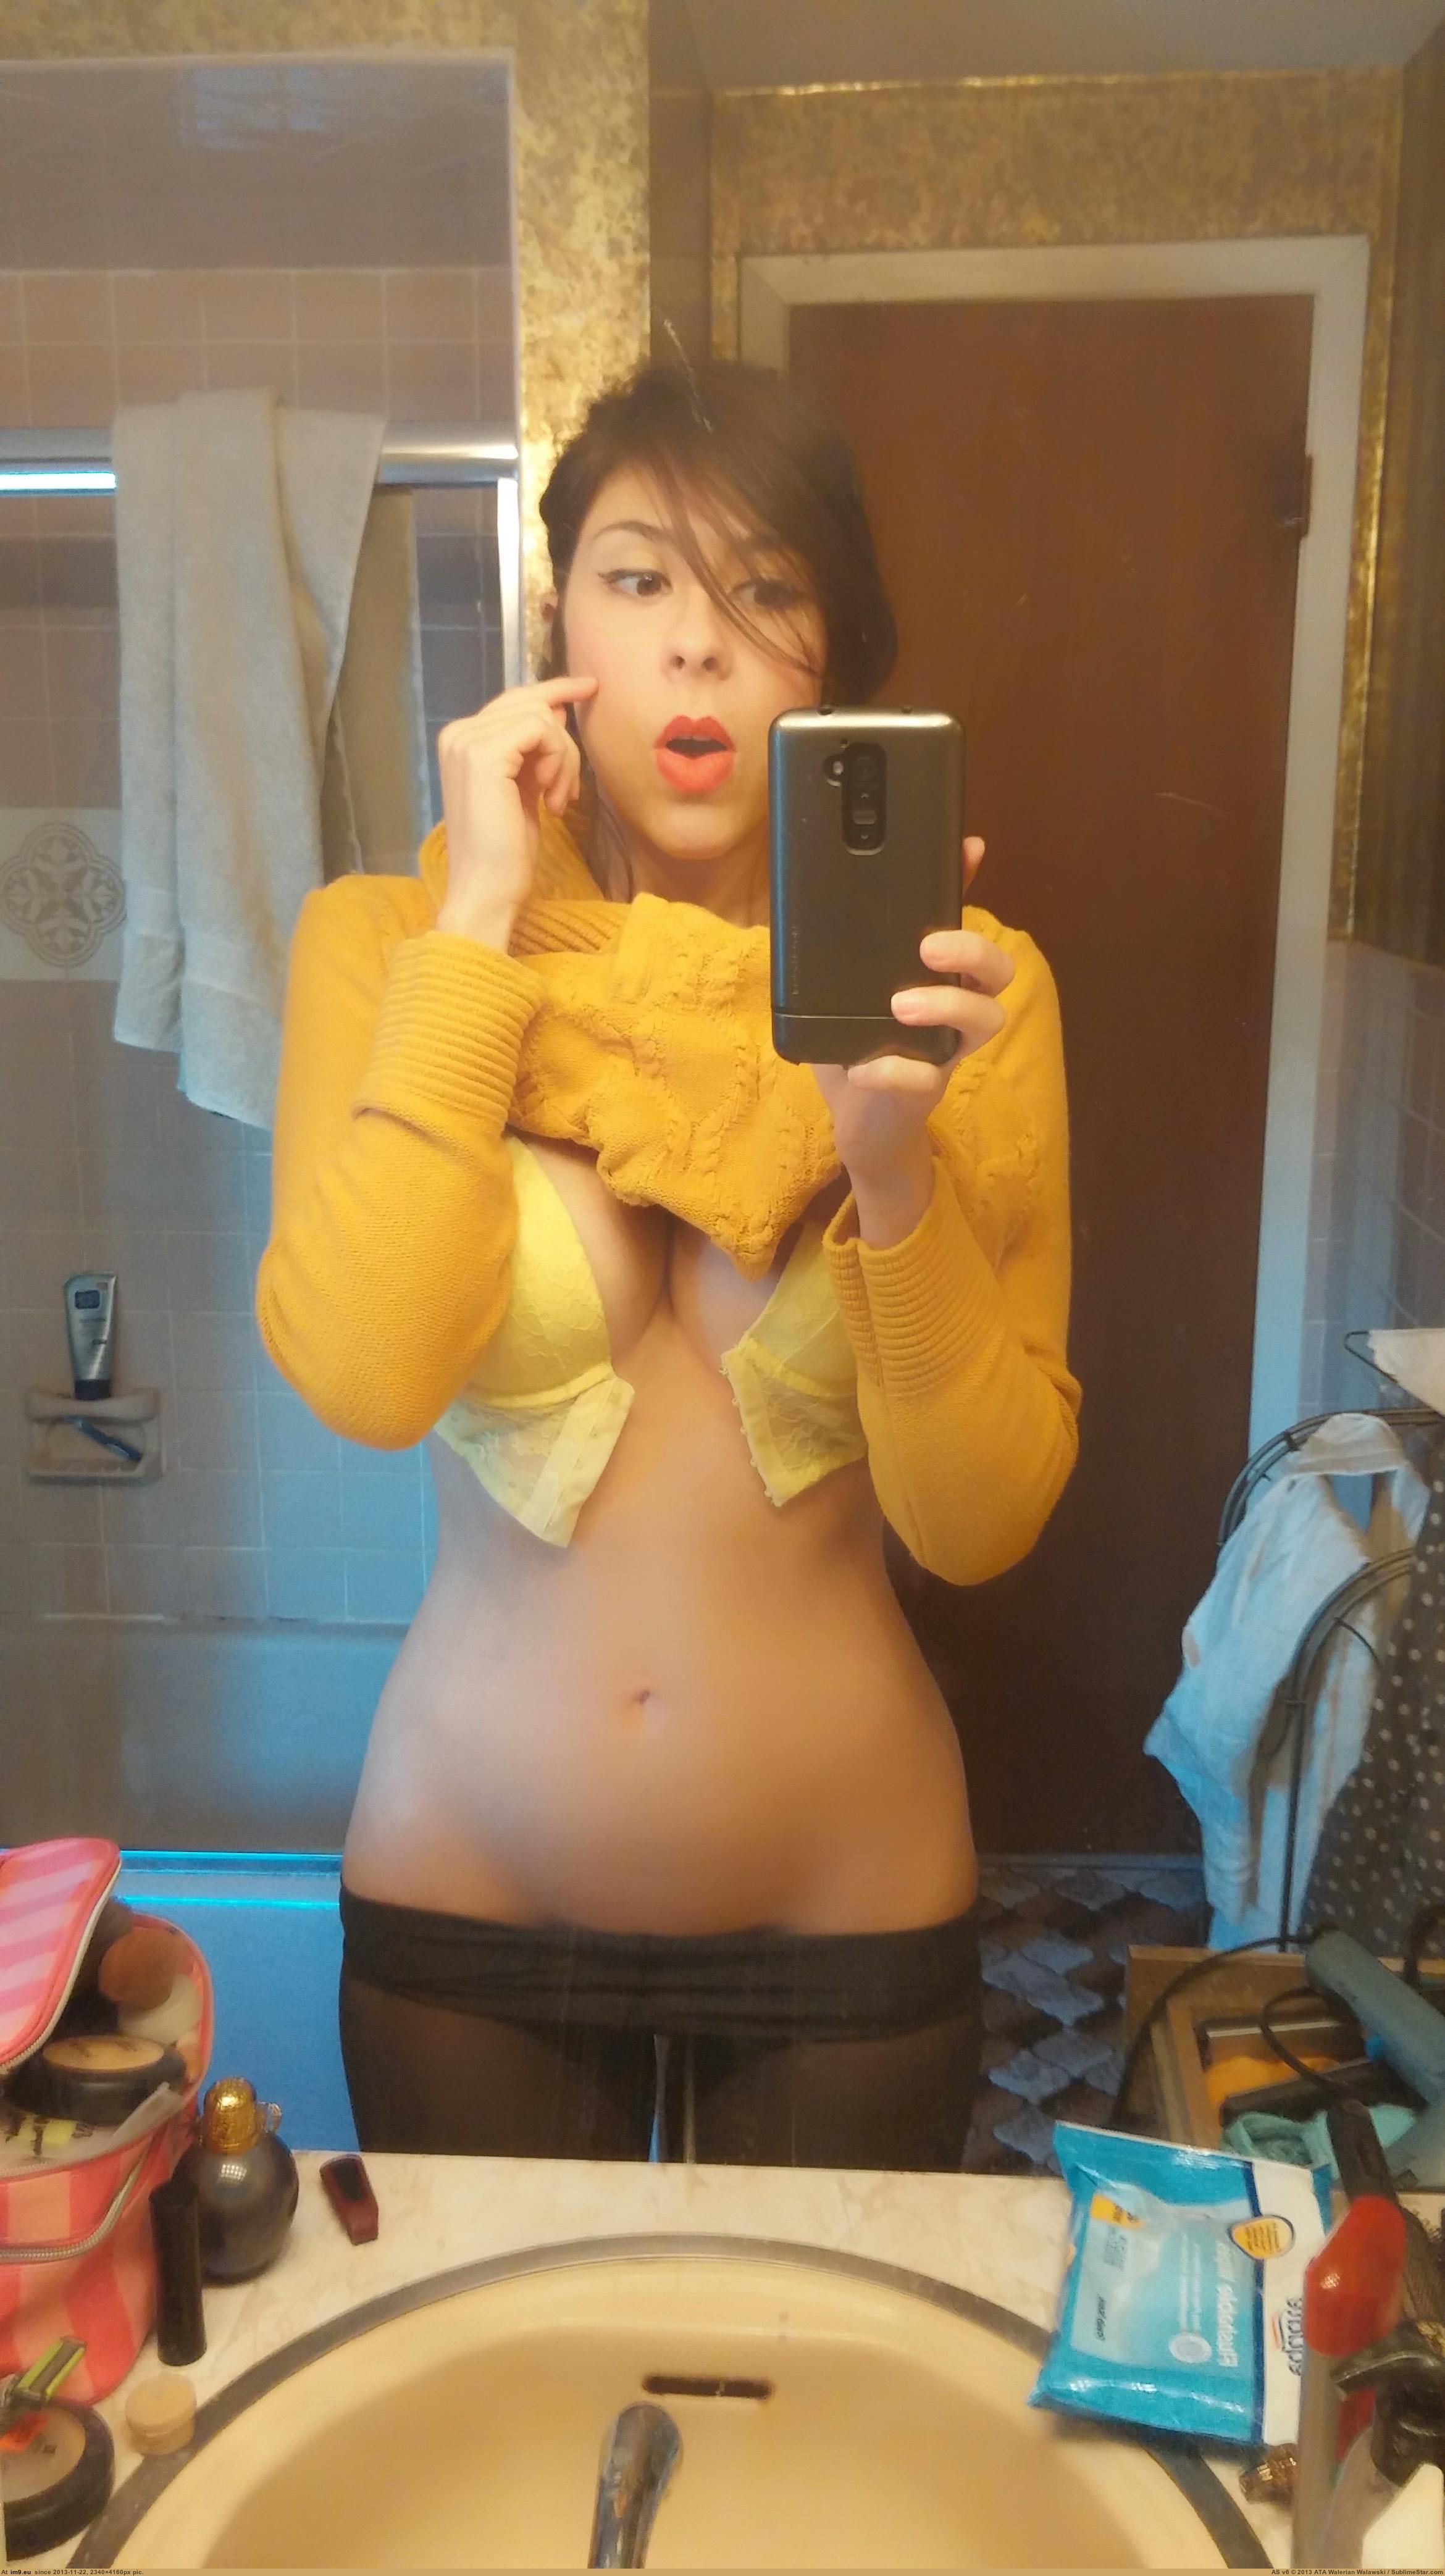 amateur-girl-boobs-selfshot-in-mirror-nude-12